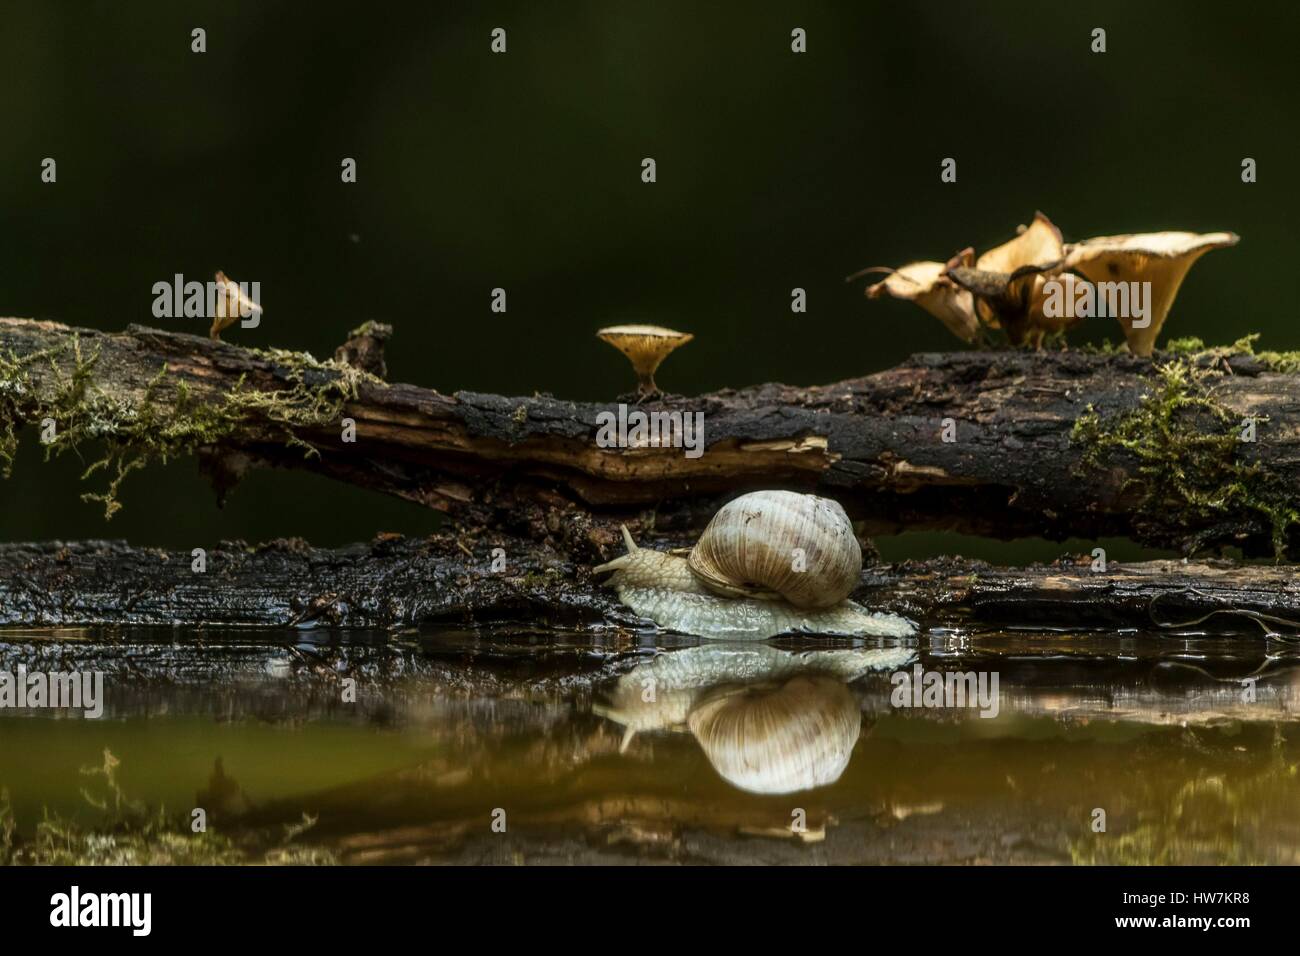 Hungary, Csongrad, Kiskunsagi National Park, Pusztaszer, gastropoda (Helix pomatia) Stock Photo